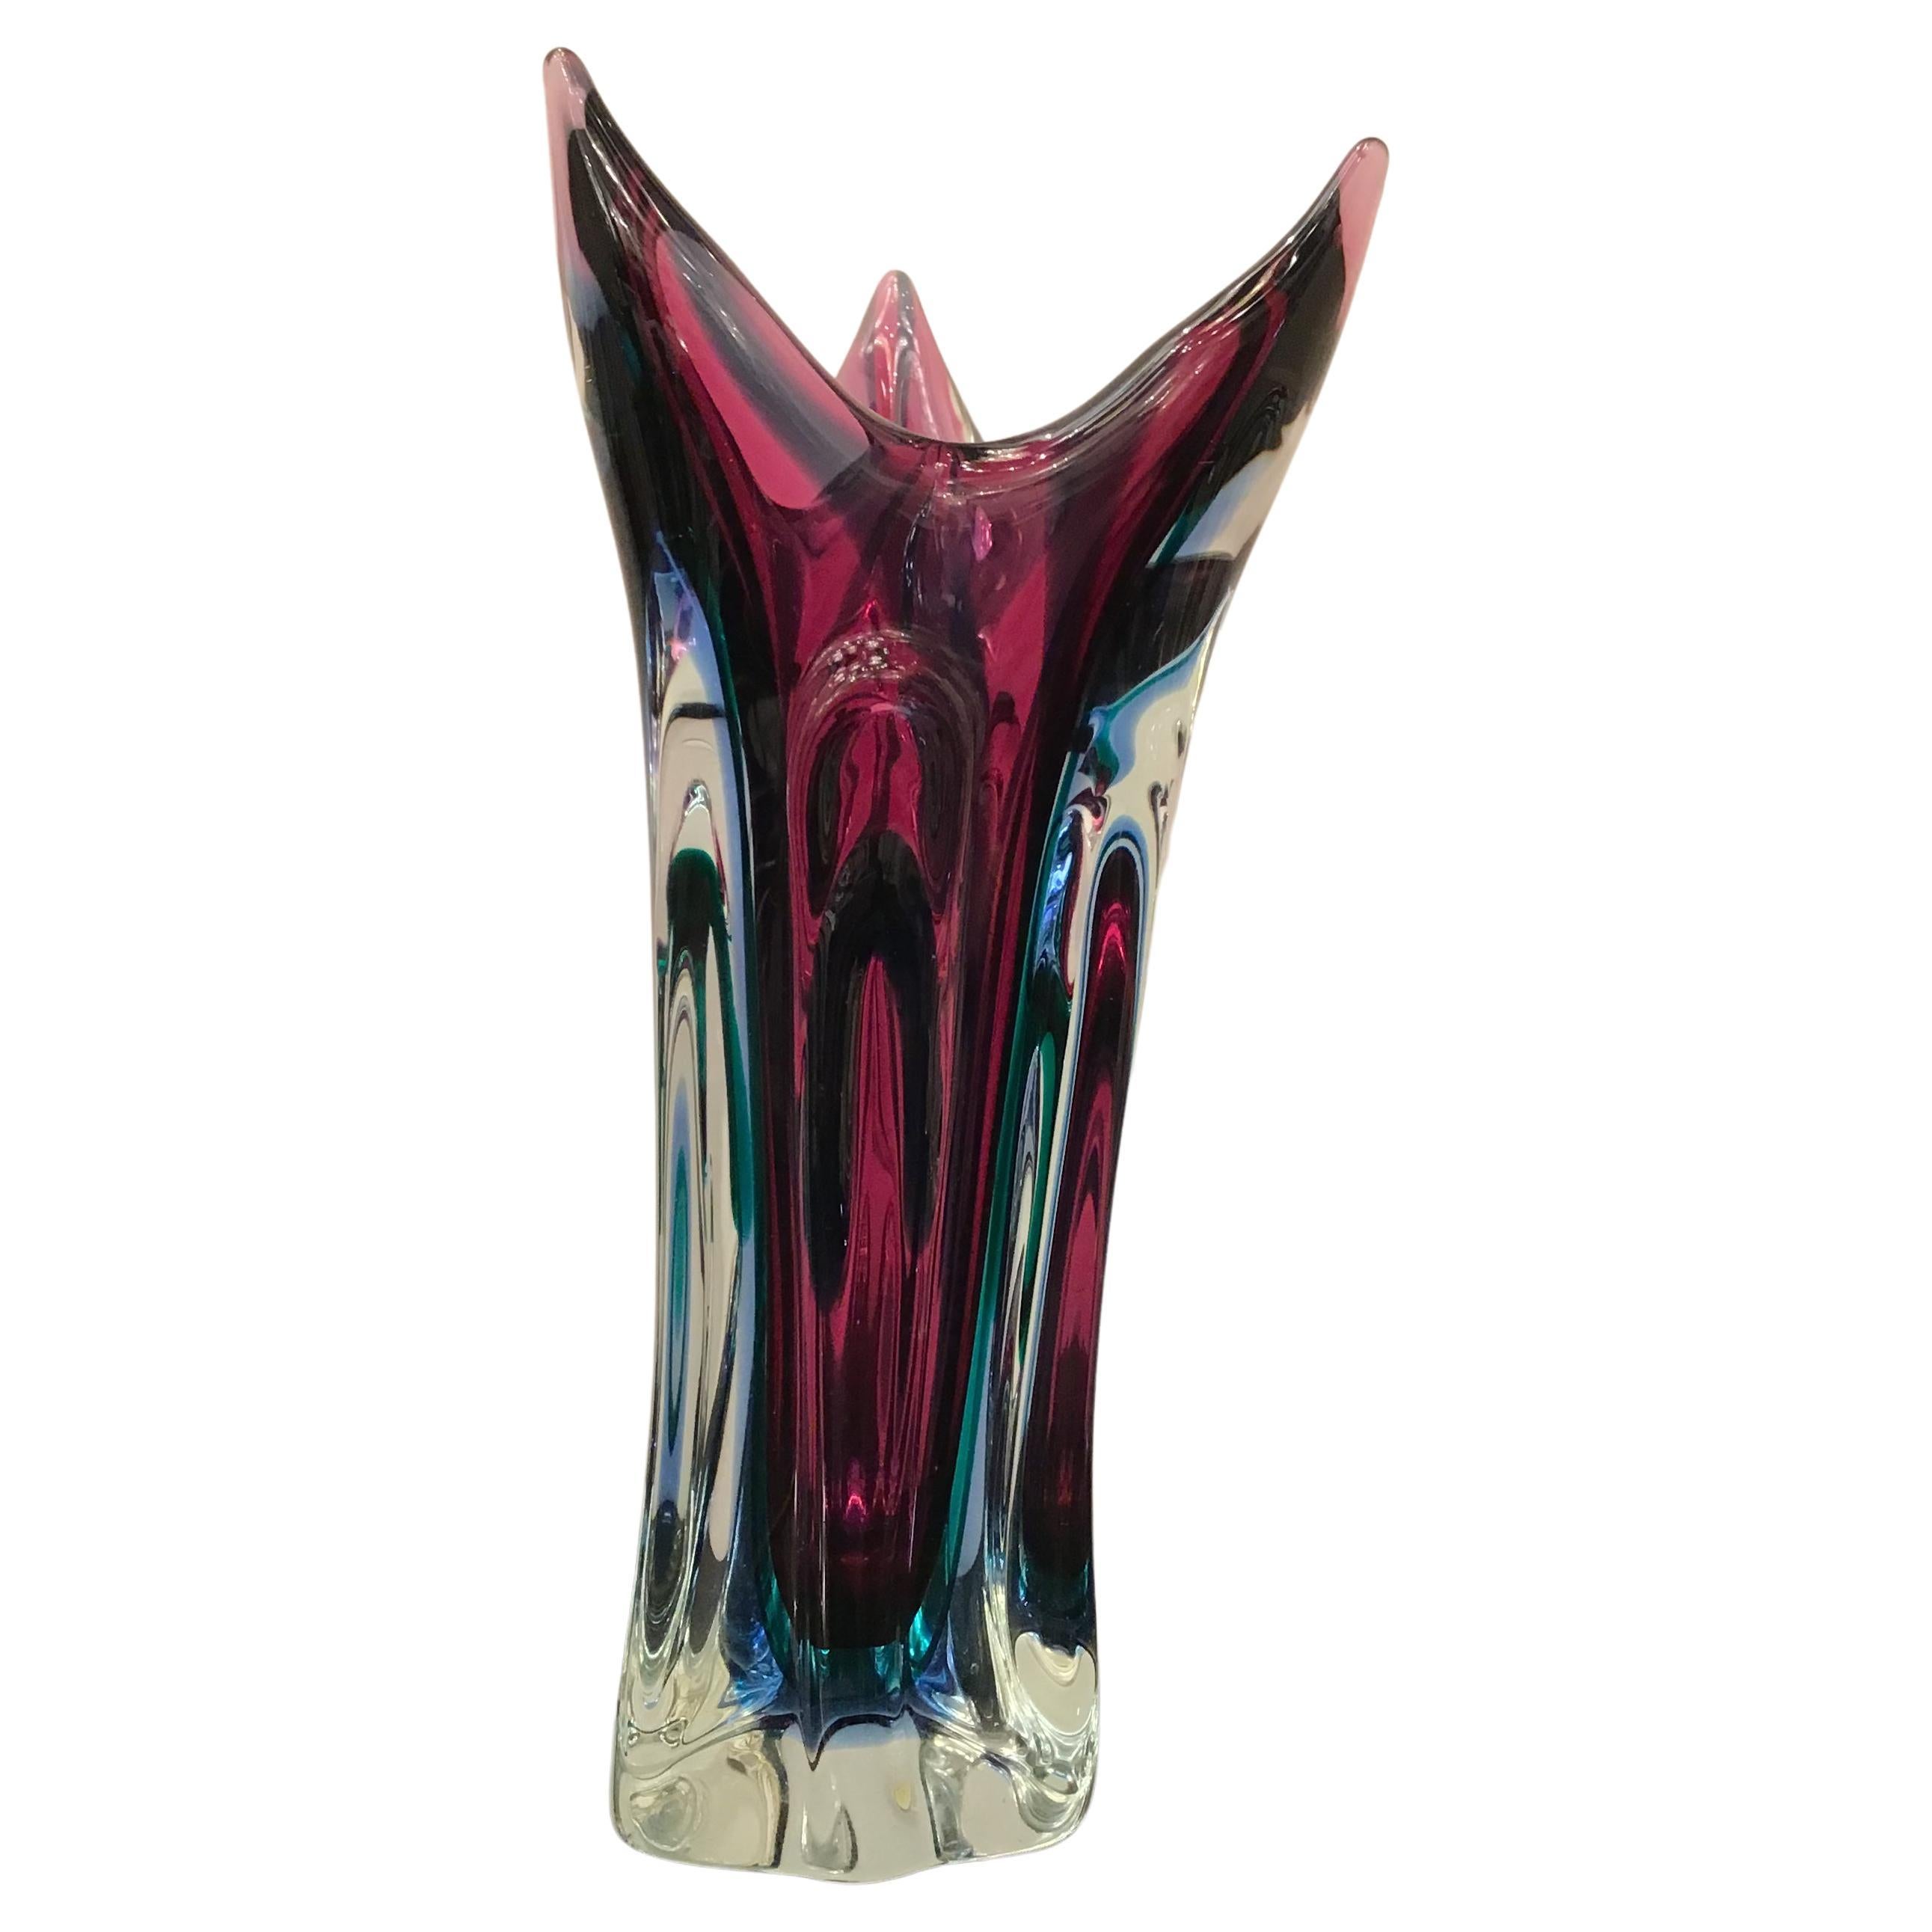 Seguso "Flavio Poli" Vase Murano Glass, 1950, Italy